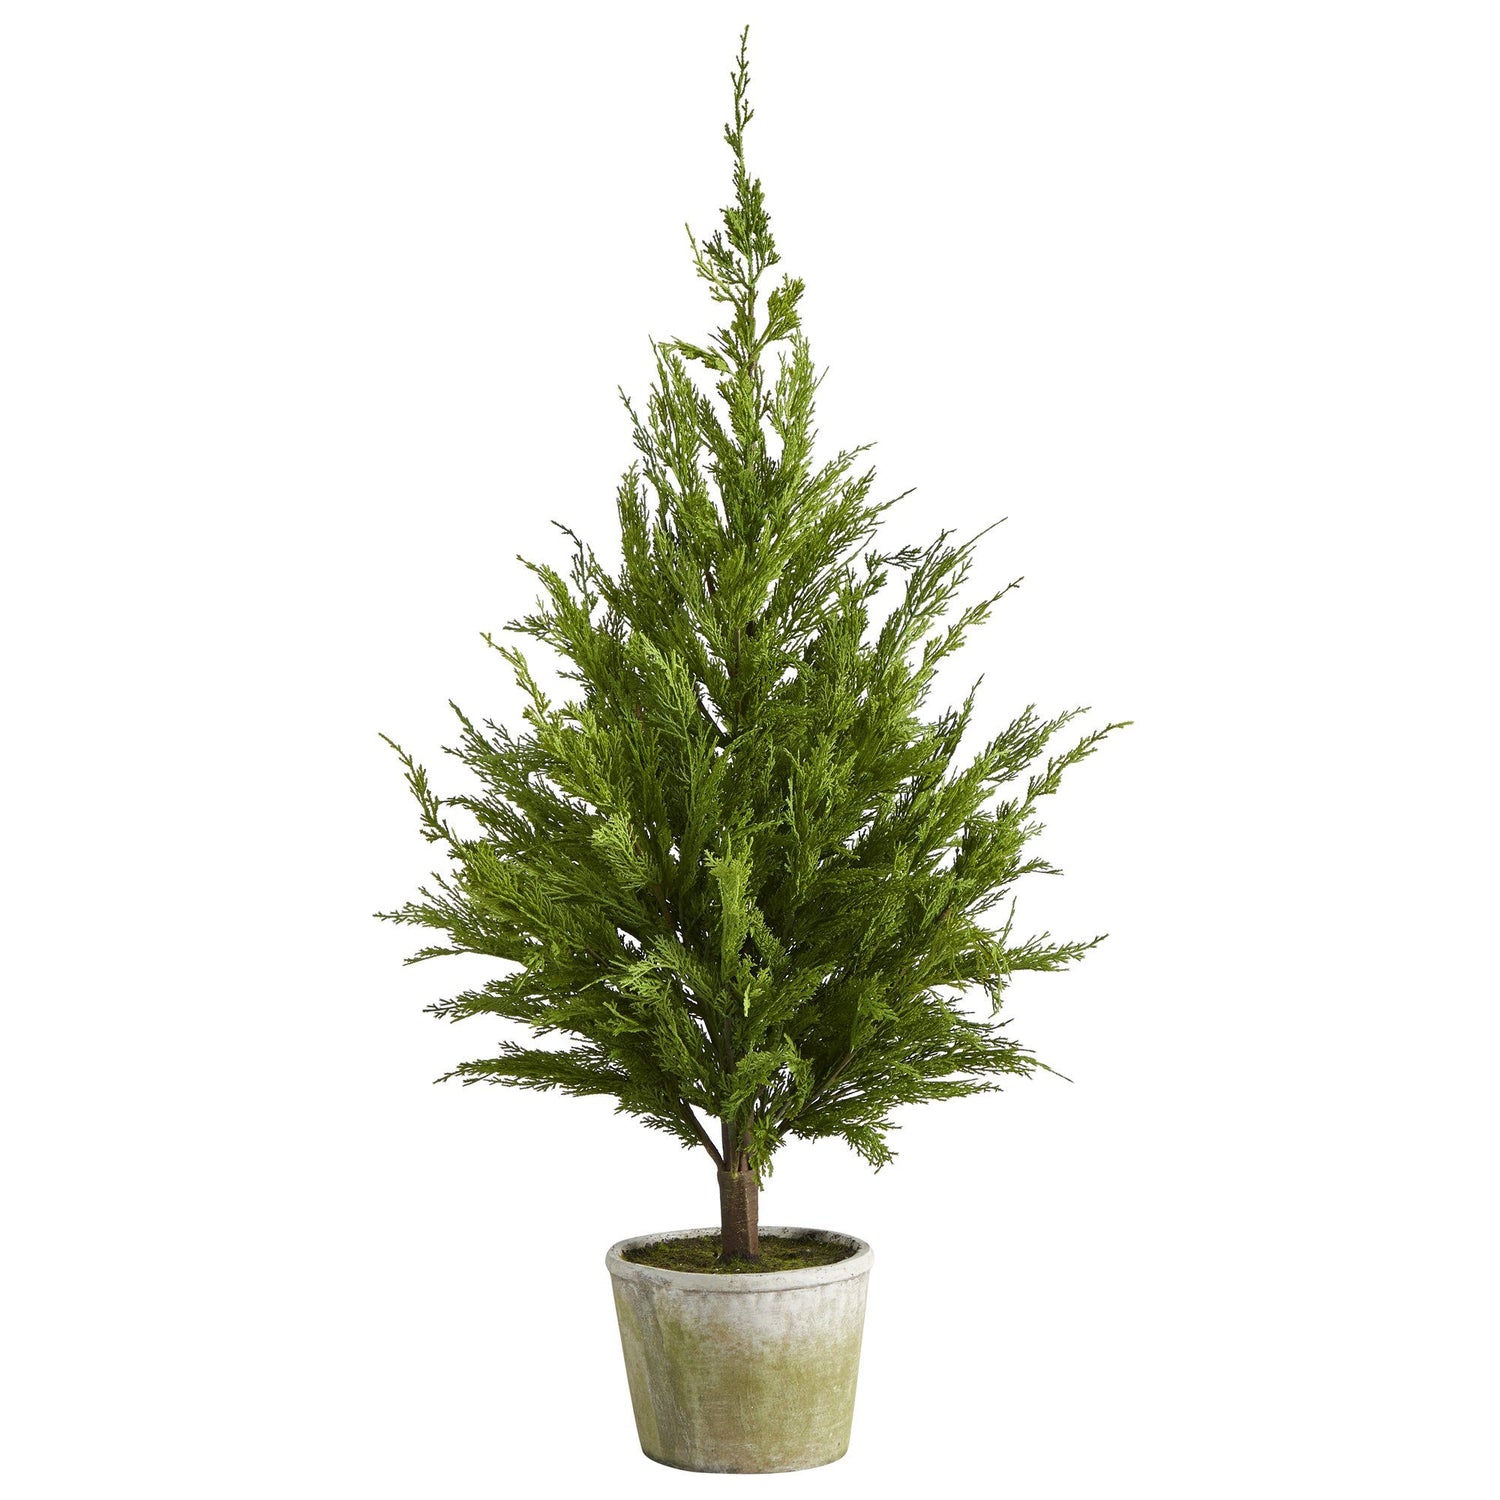 3.5’ Cedar Pine “Natural Look” Artificial Tree in Decorative Planter